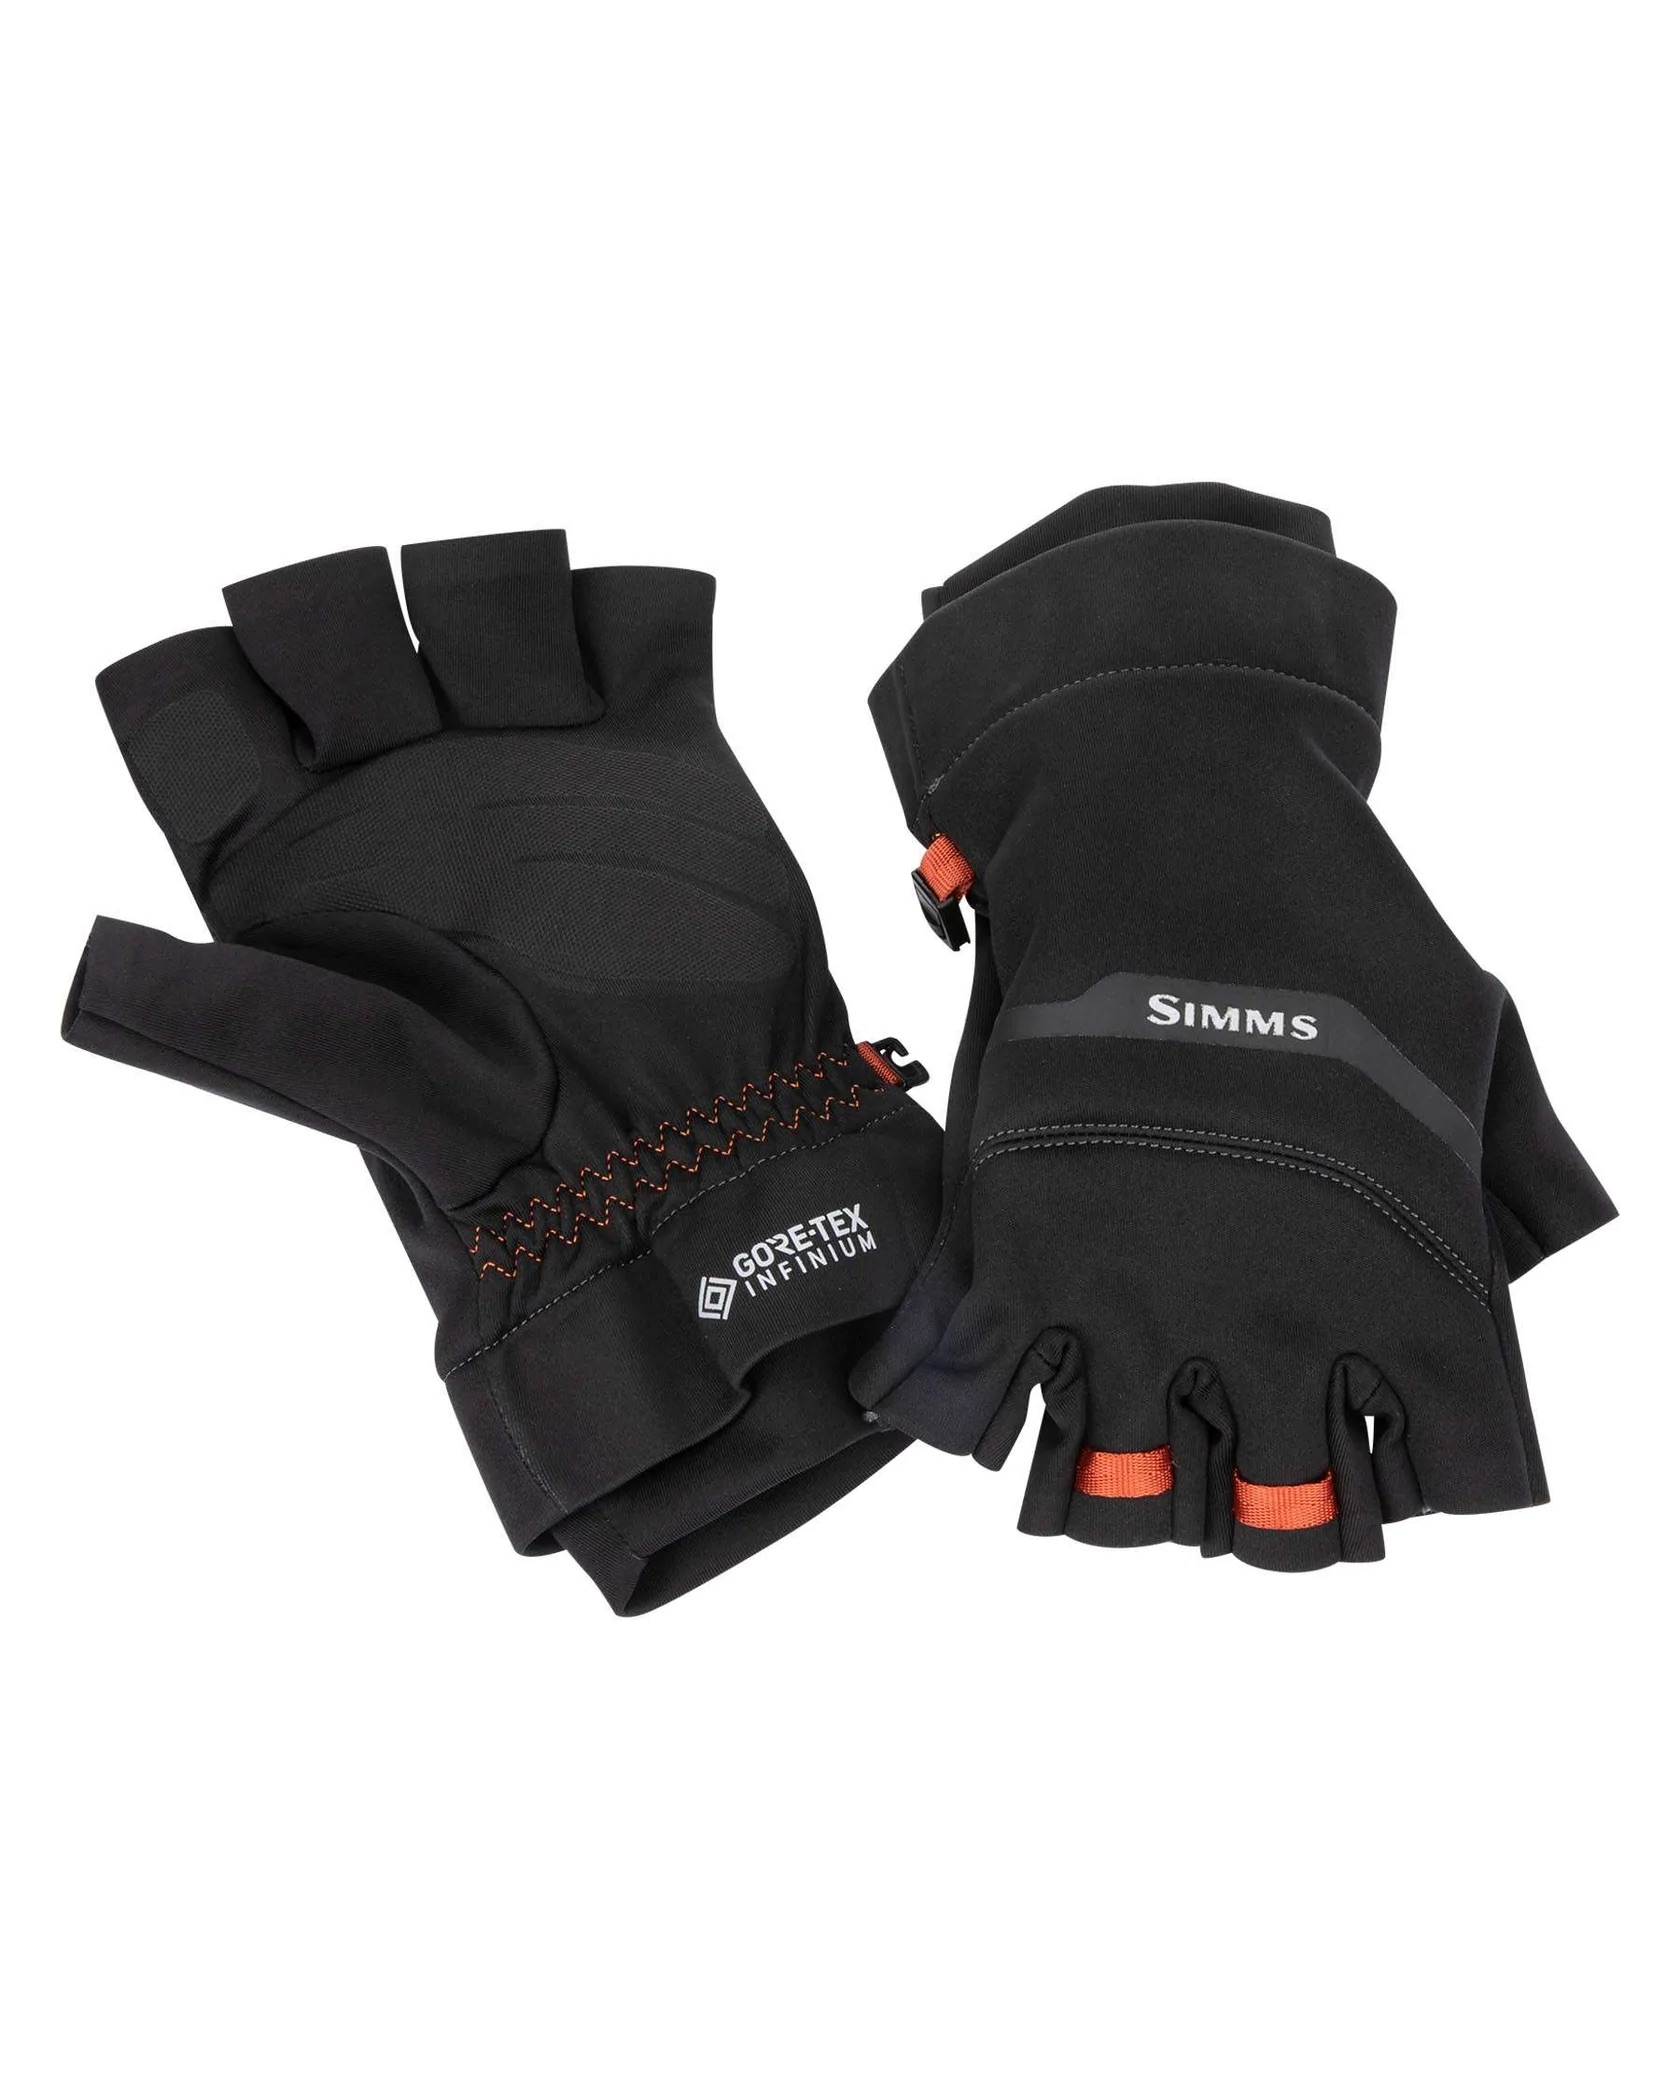 Simms GORE-TEX Infinium Half-Finger Glove - Black - Small